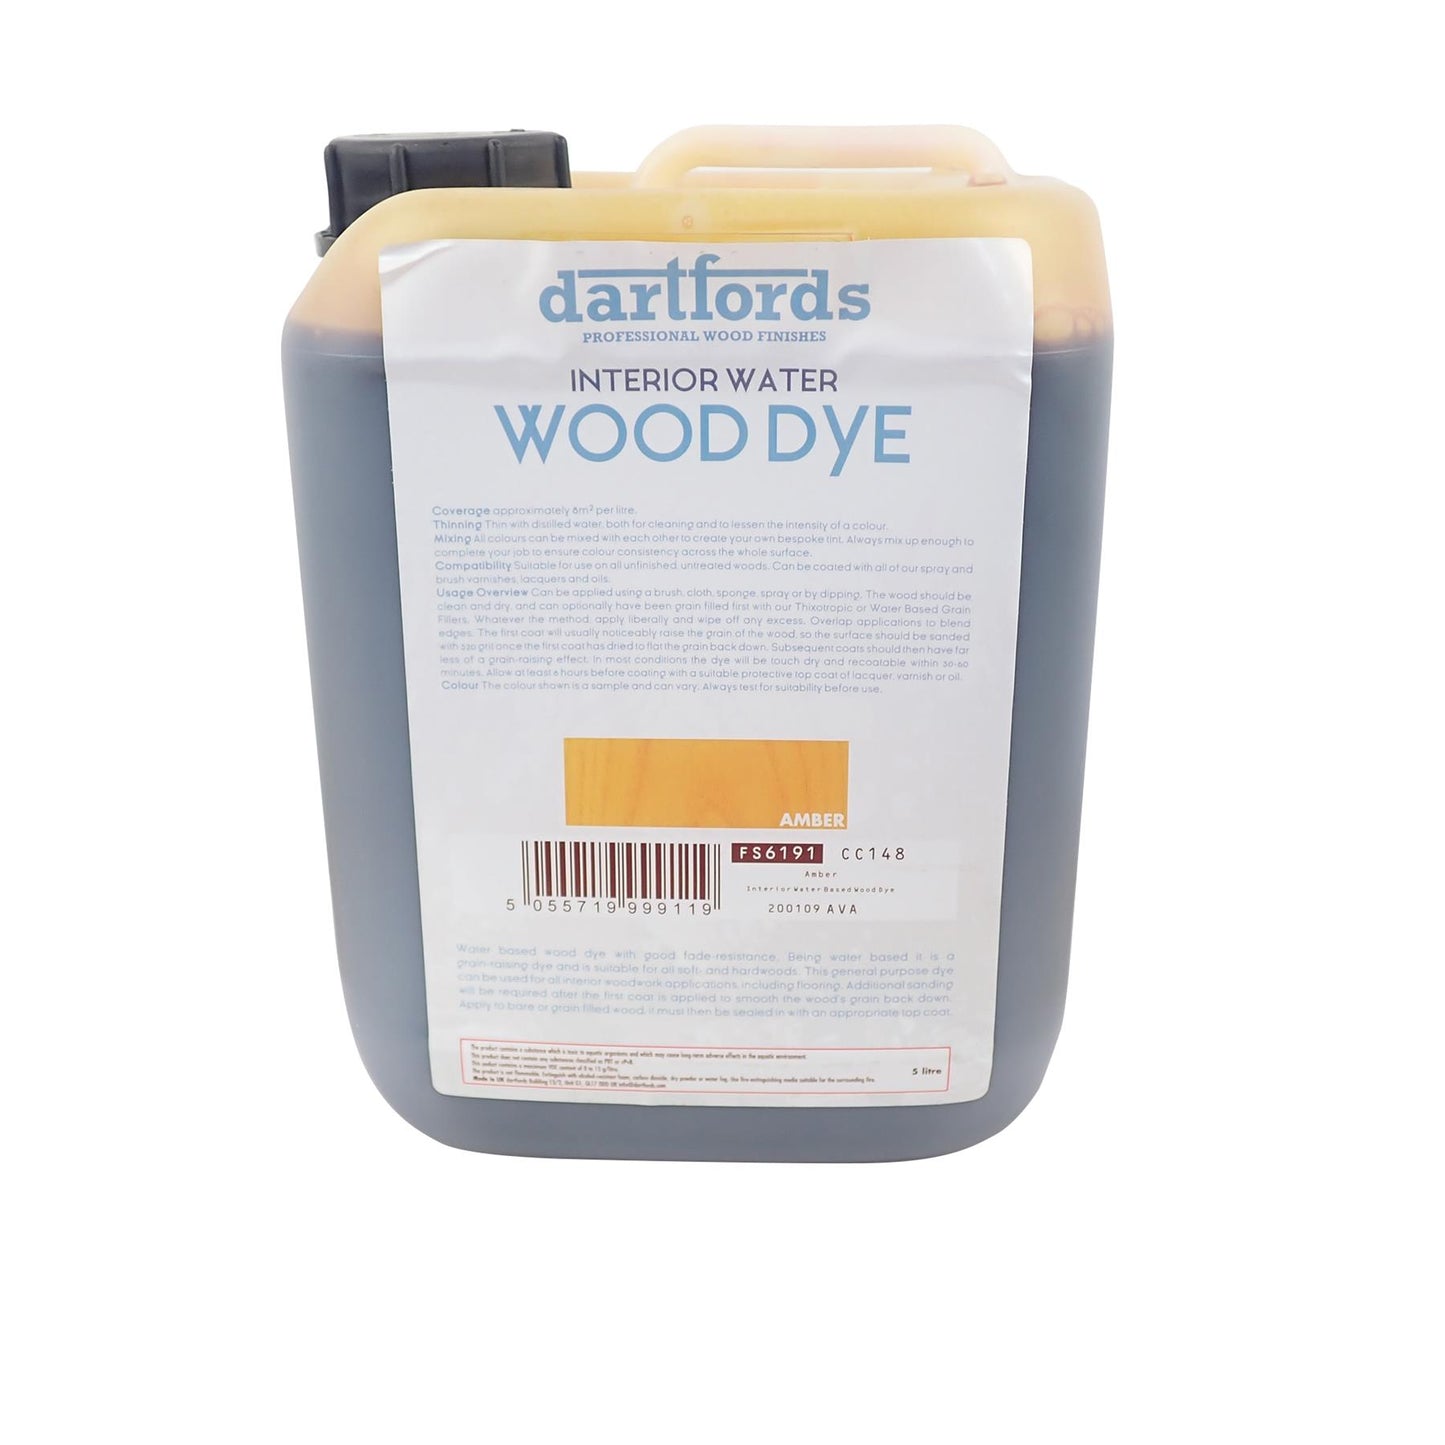 dartfords Amber Interior Water Based Wood Dye - 5 litre Jerrycan